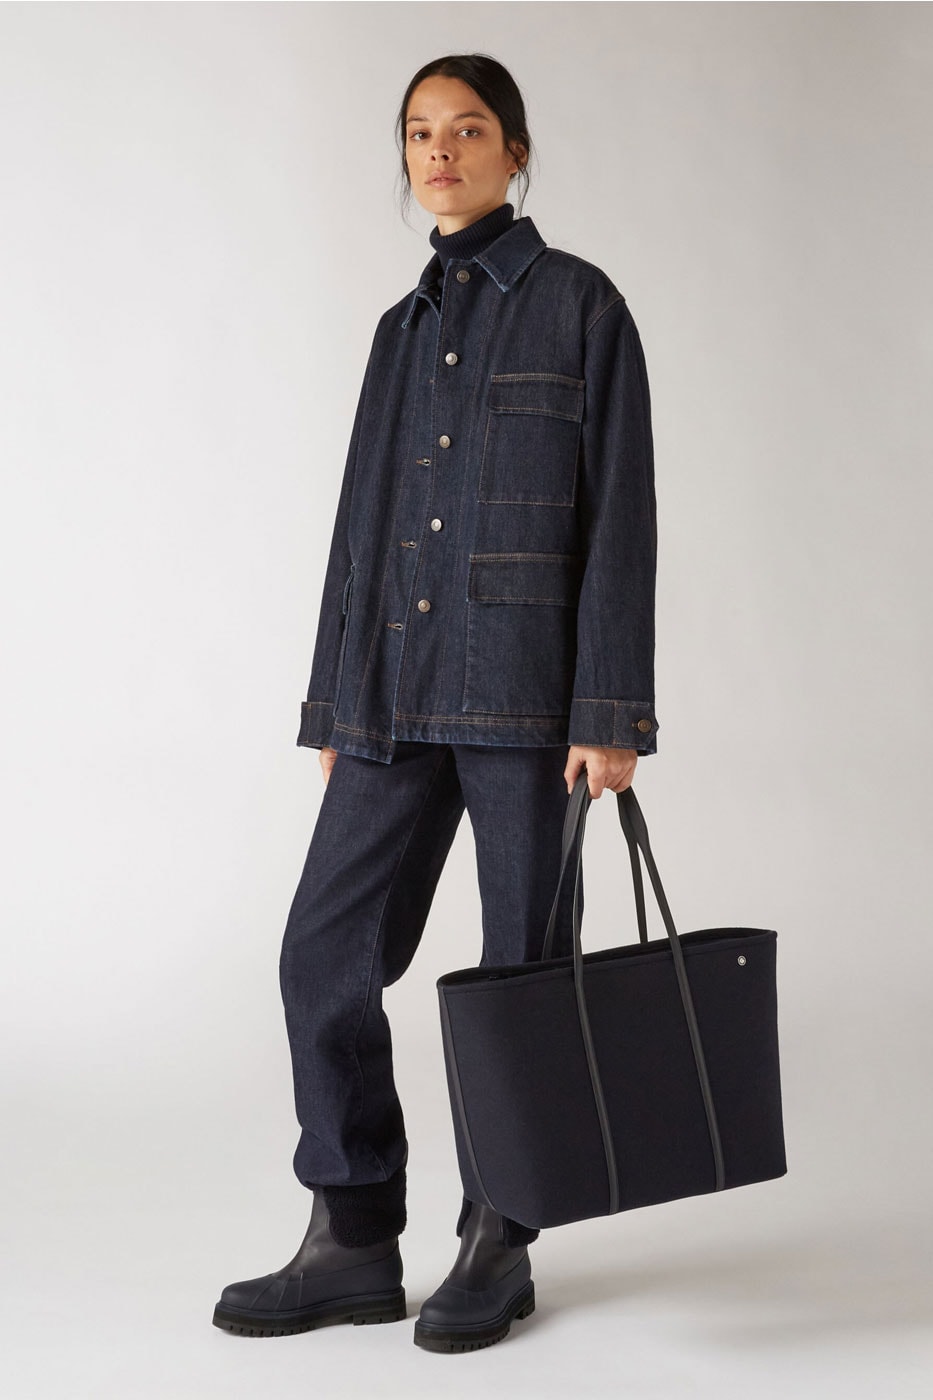 Loro Piana, ready-to-wear, cashmere - Fashion & Leather Goods - LVMH